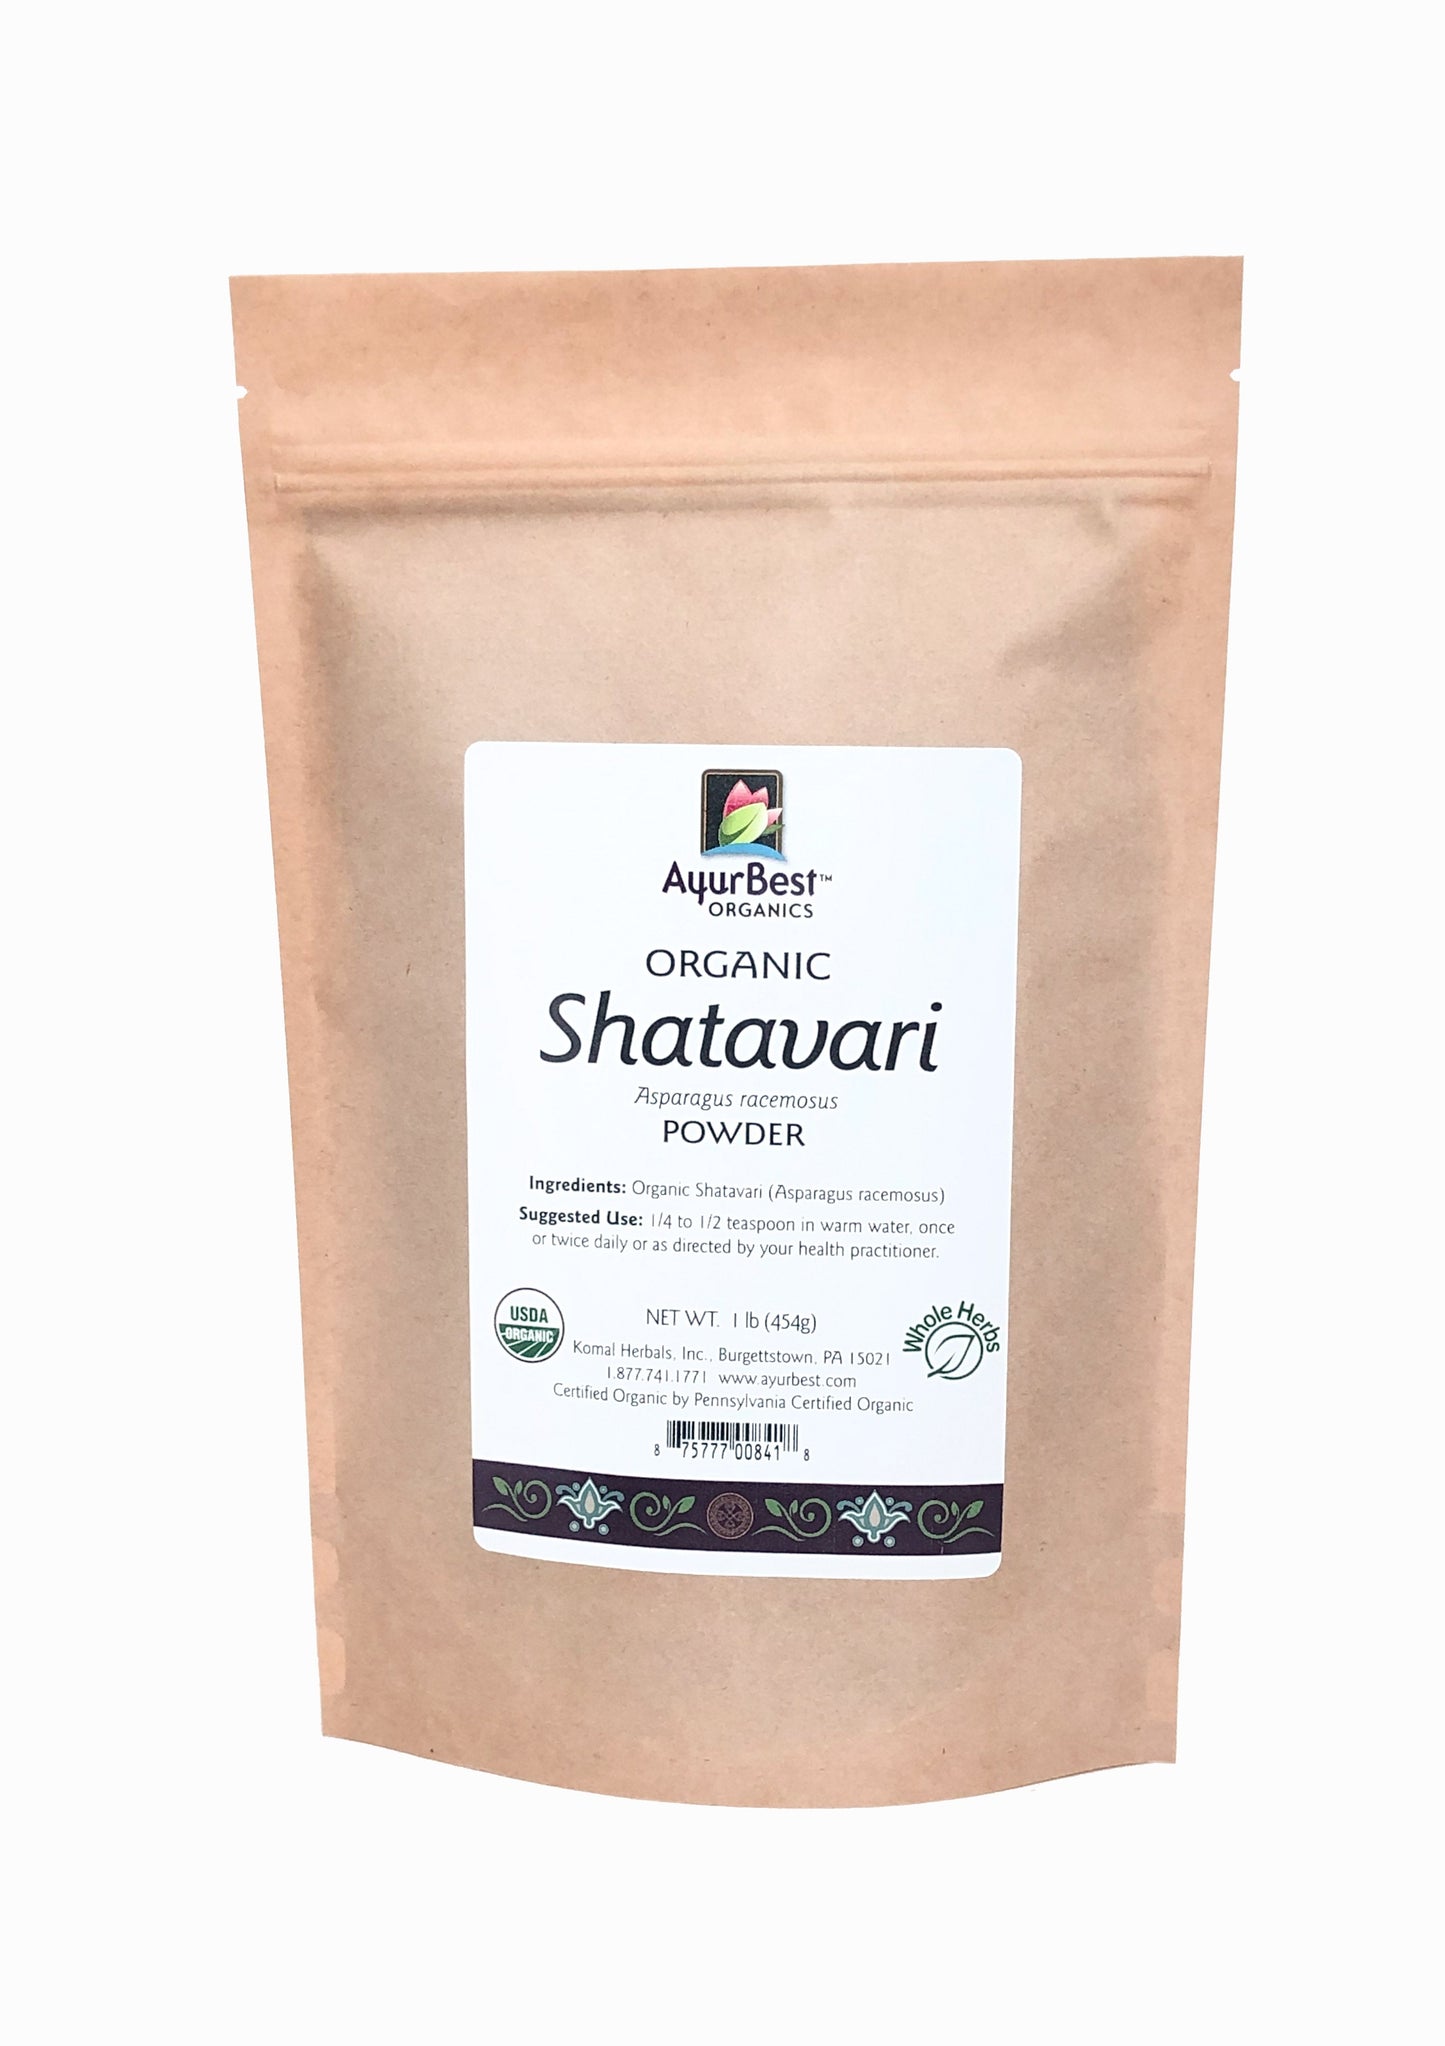 Wholesale Spices & Herbs - Shatavari Powder, Organic 1 lb (454g) Bag